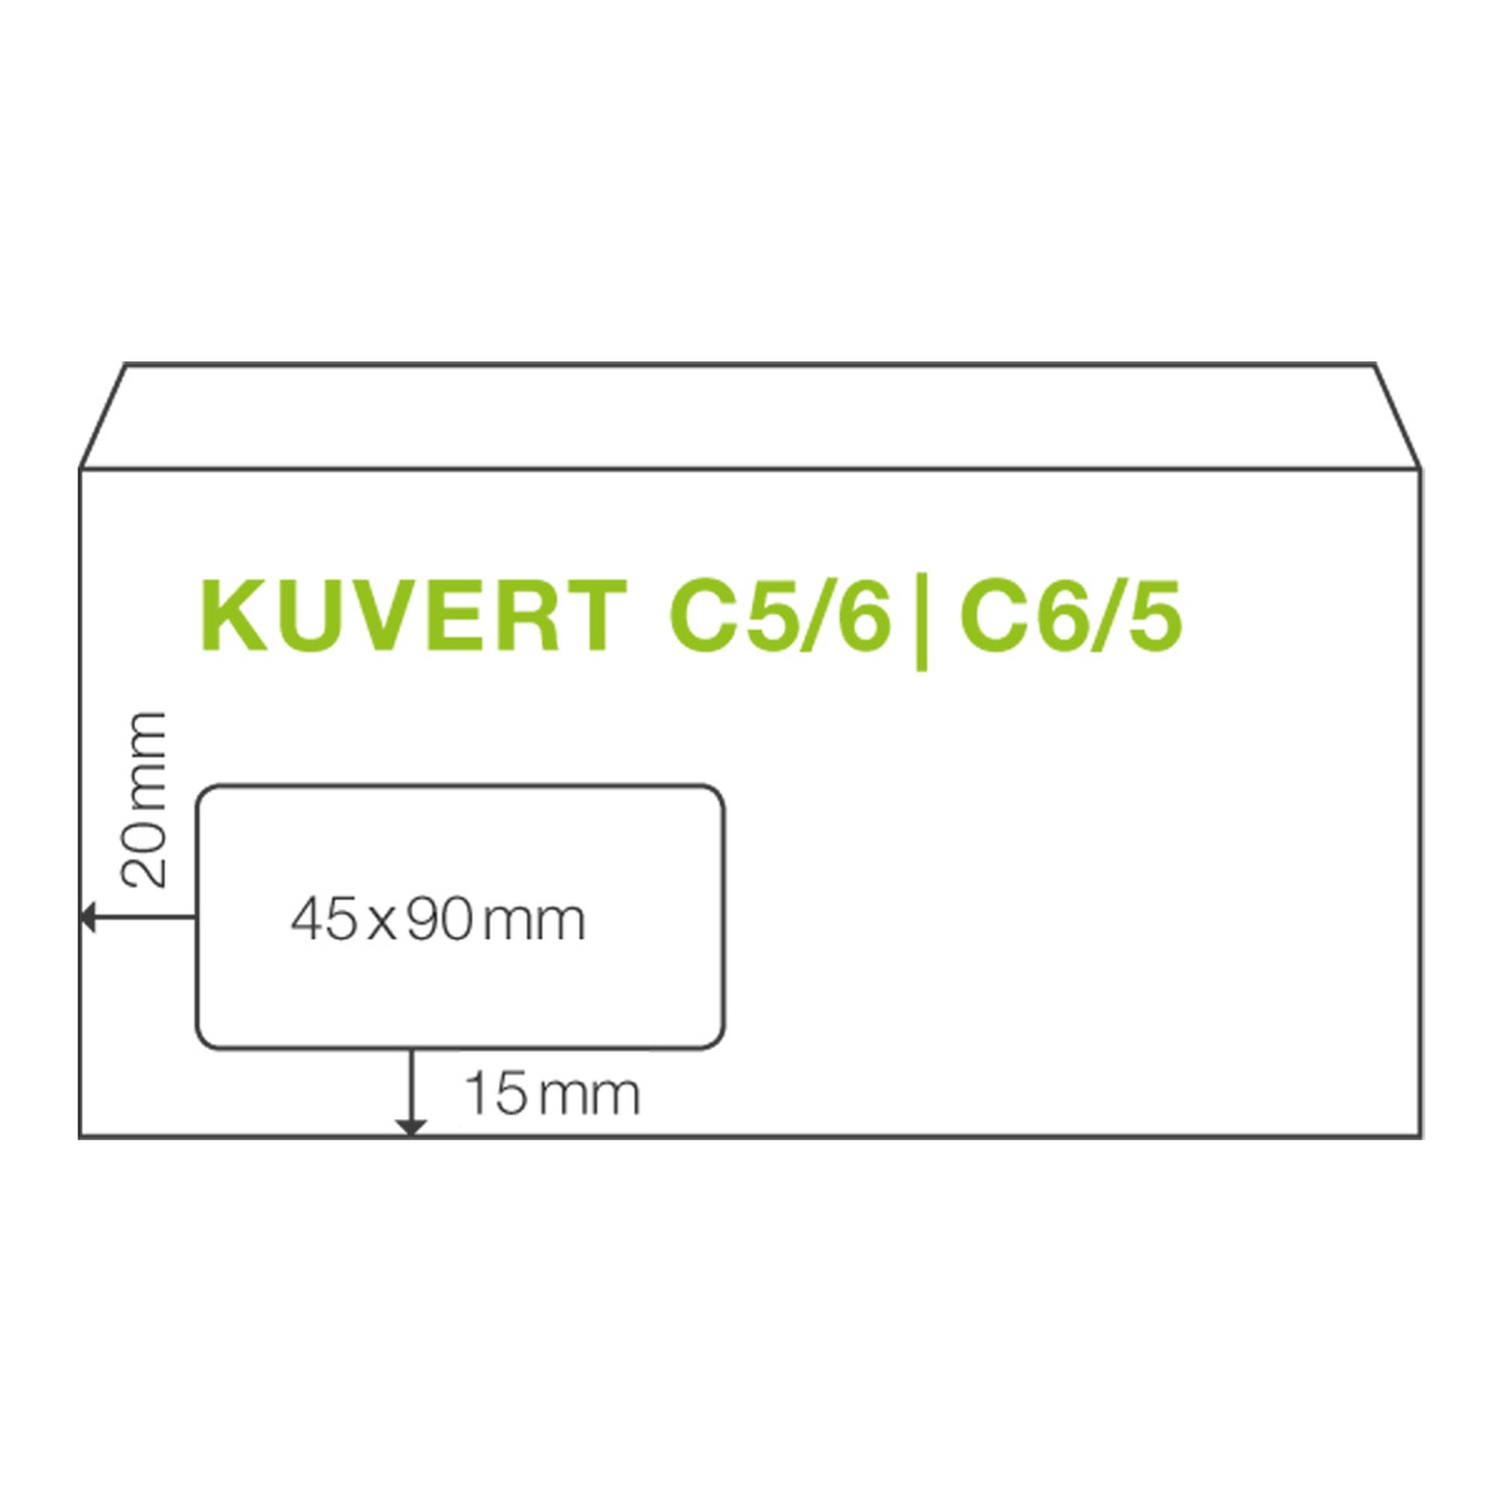 KI Fensterkuvert C5/6 110x220mm wei, 80 gr. selbstklebend, 100 Stk.